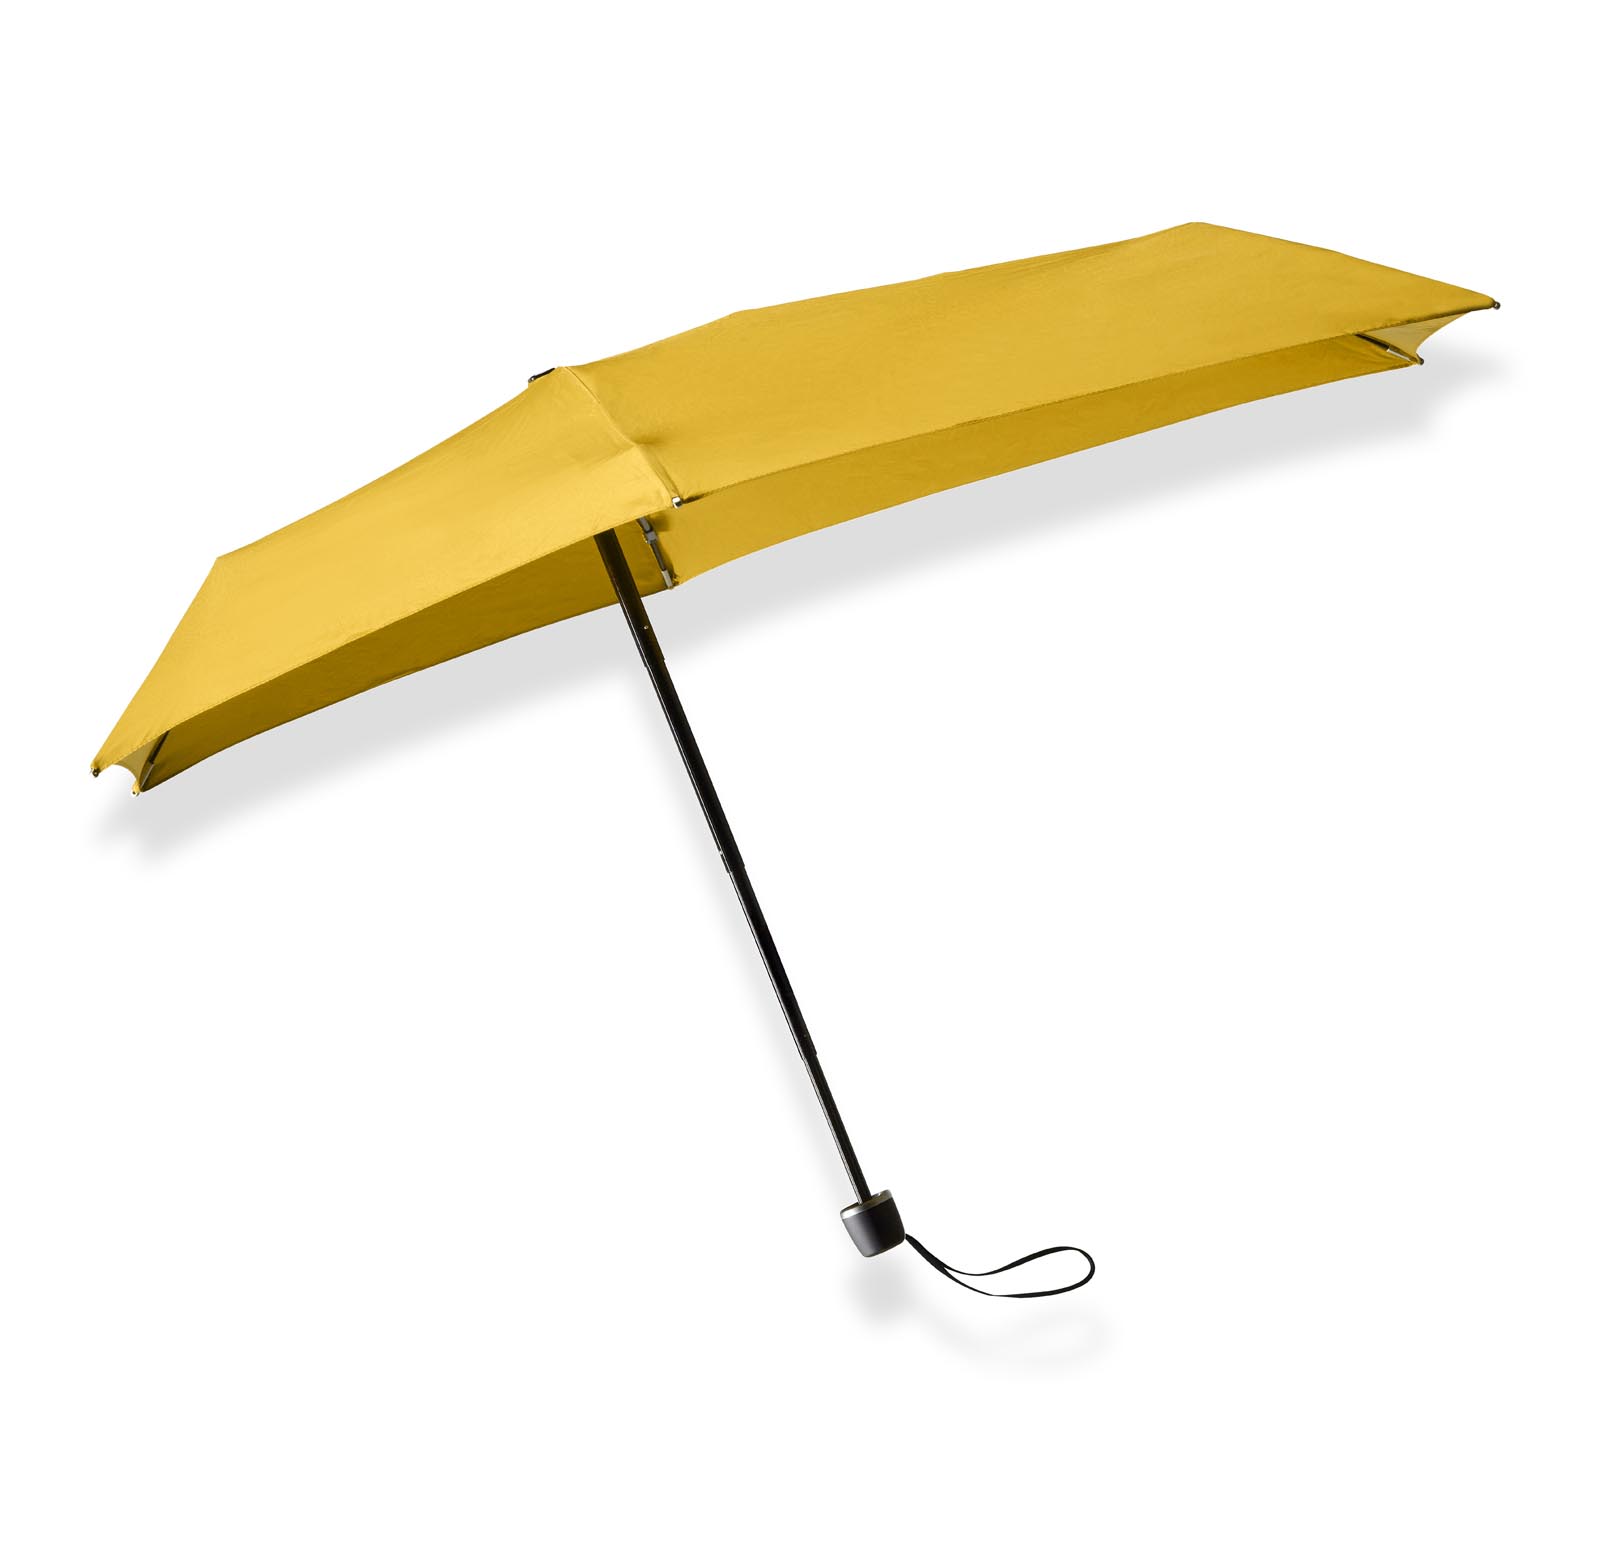 Draai vast Pessimist ijs Gele opvouwbare paraplu micro kopen? senz° micro daylily yellow